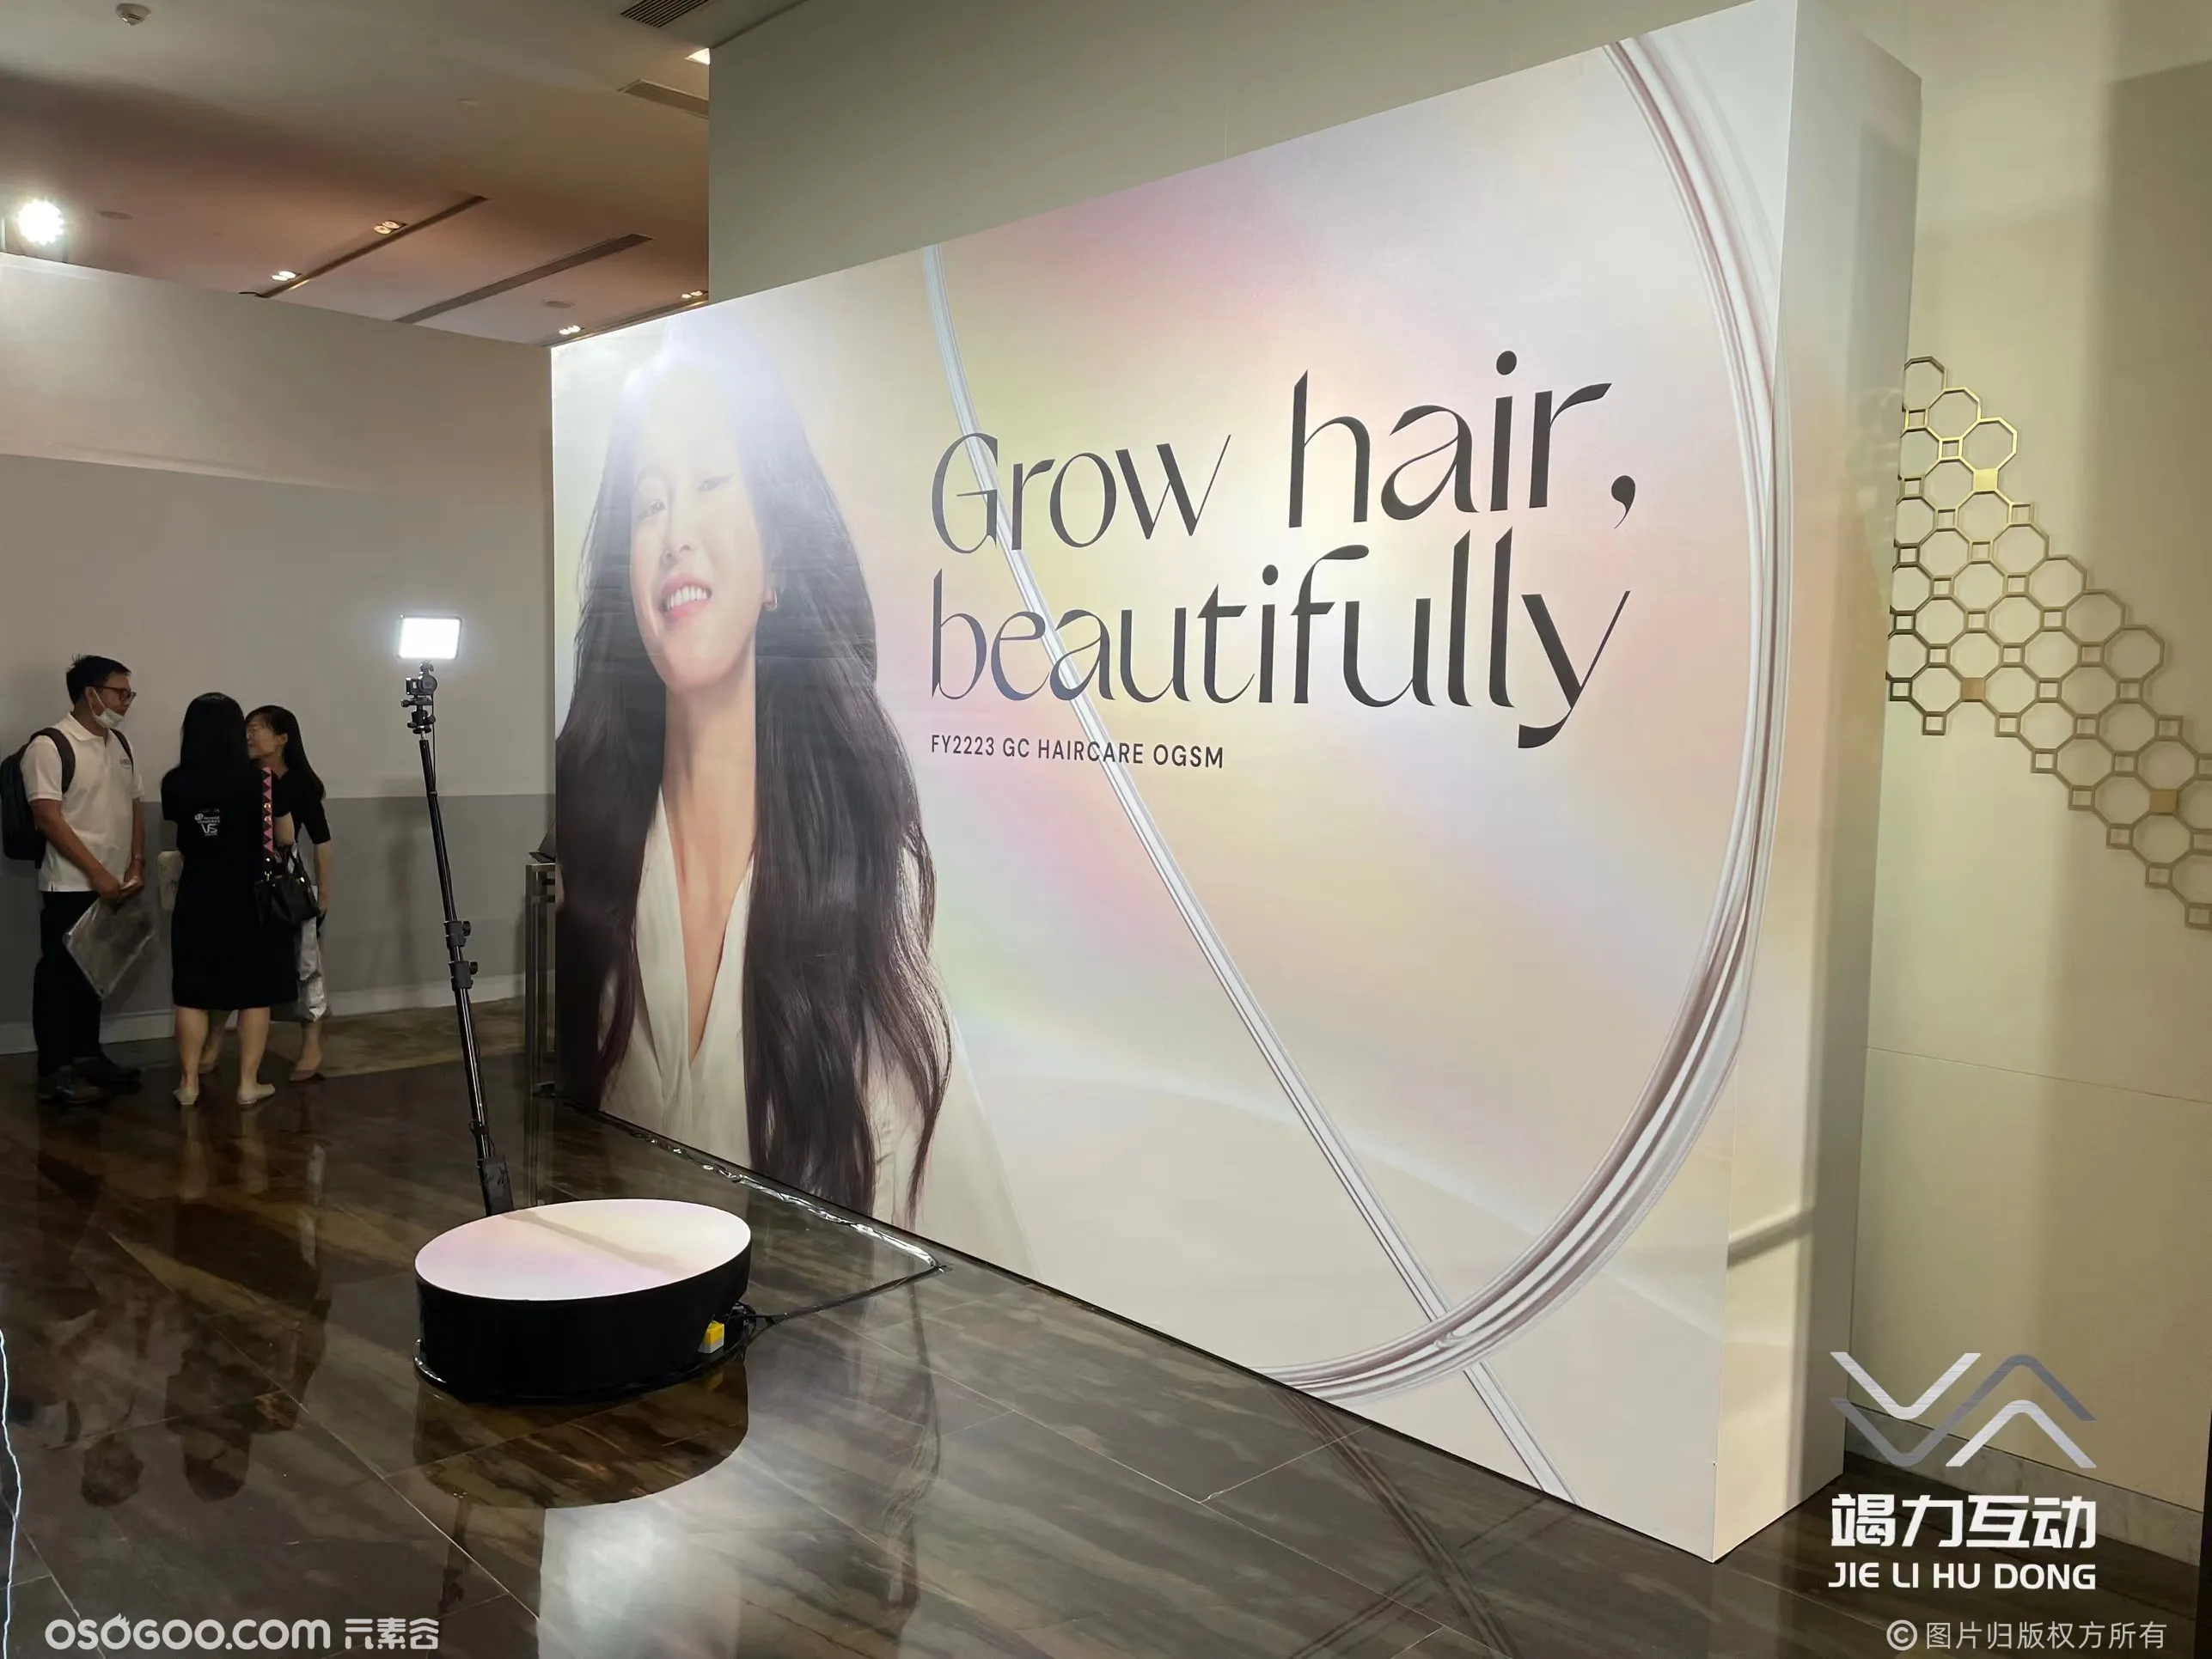 GROW Hair beautiful 360度旋转自拍互动